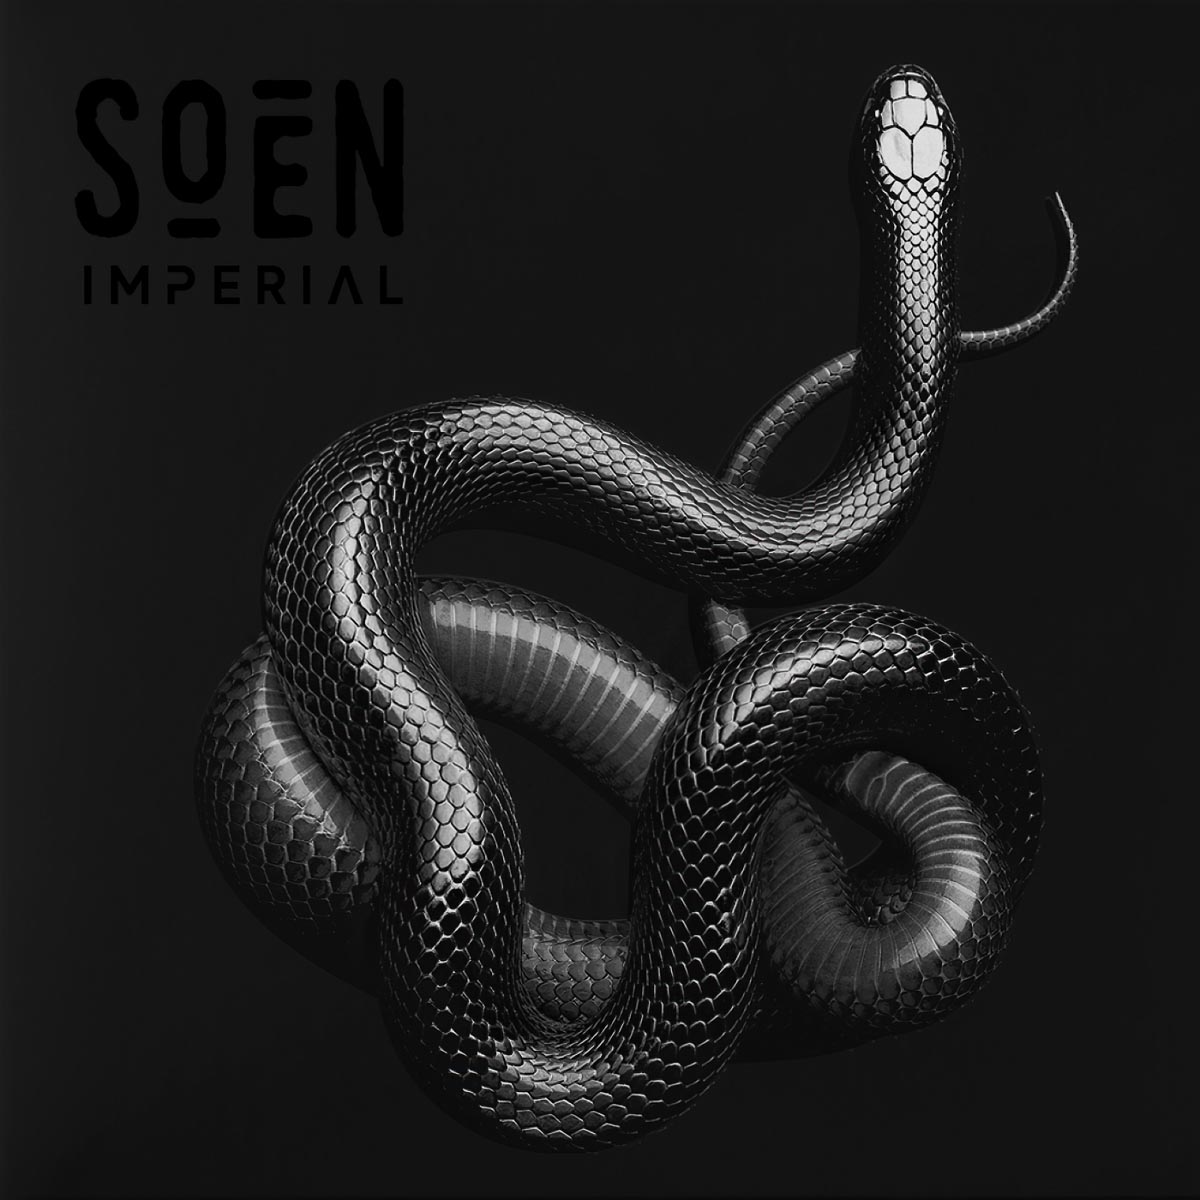 SOEN Announce New Album “Imperial” for January 29, 2021, Unveil Lyric